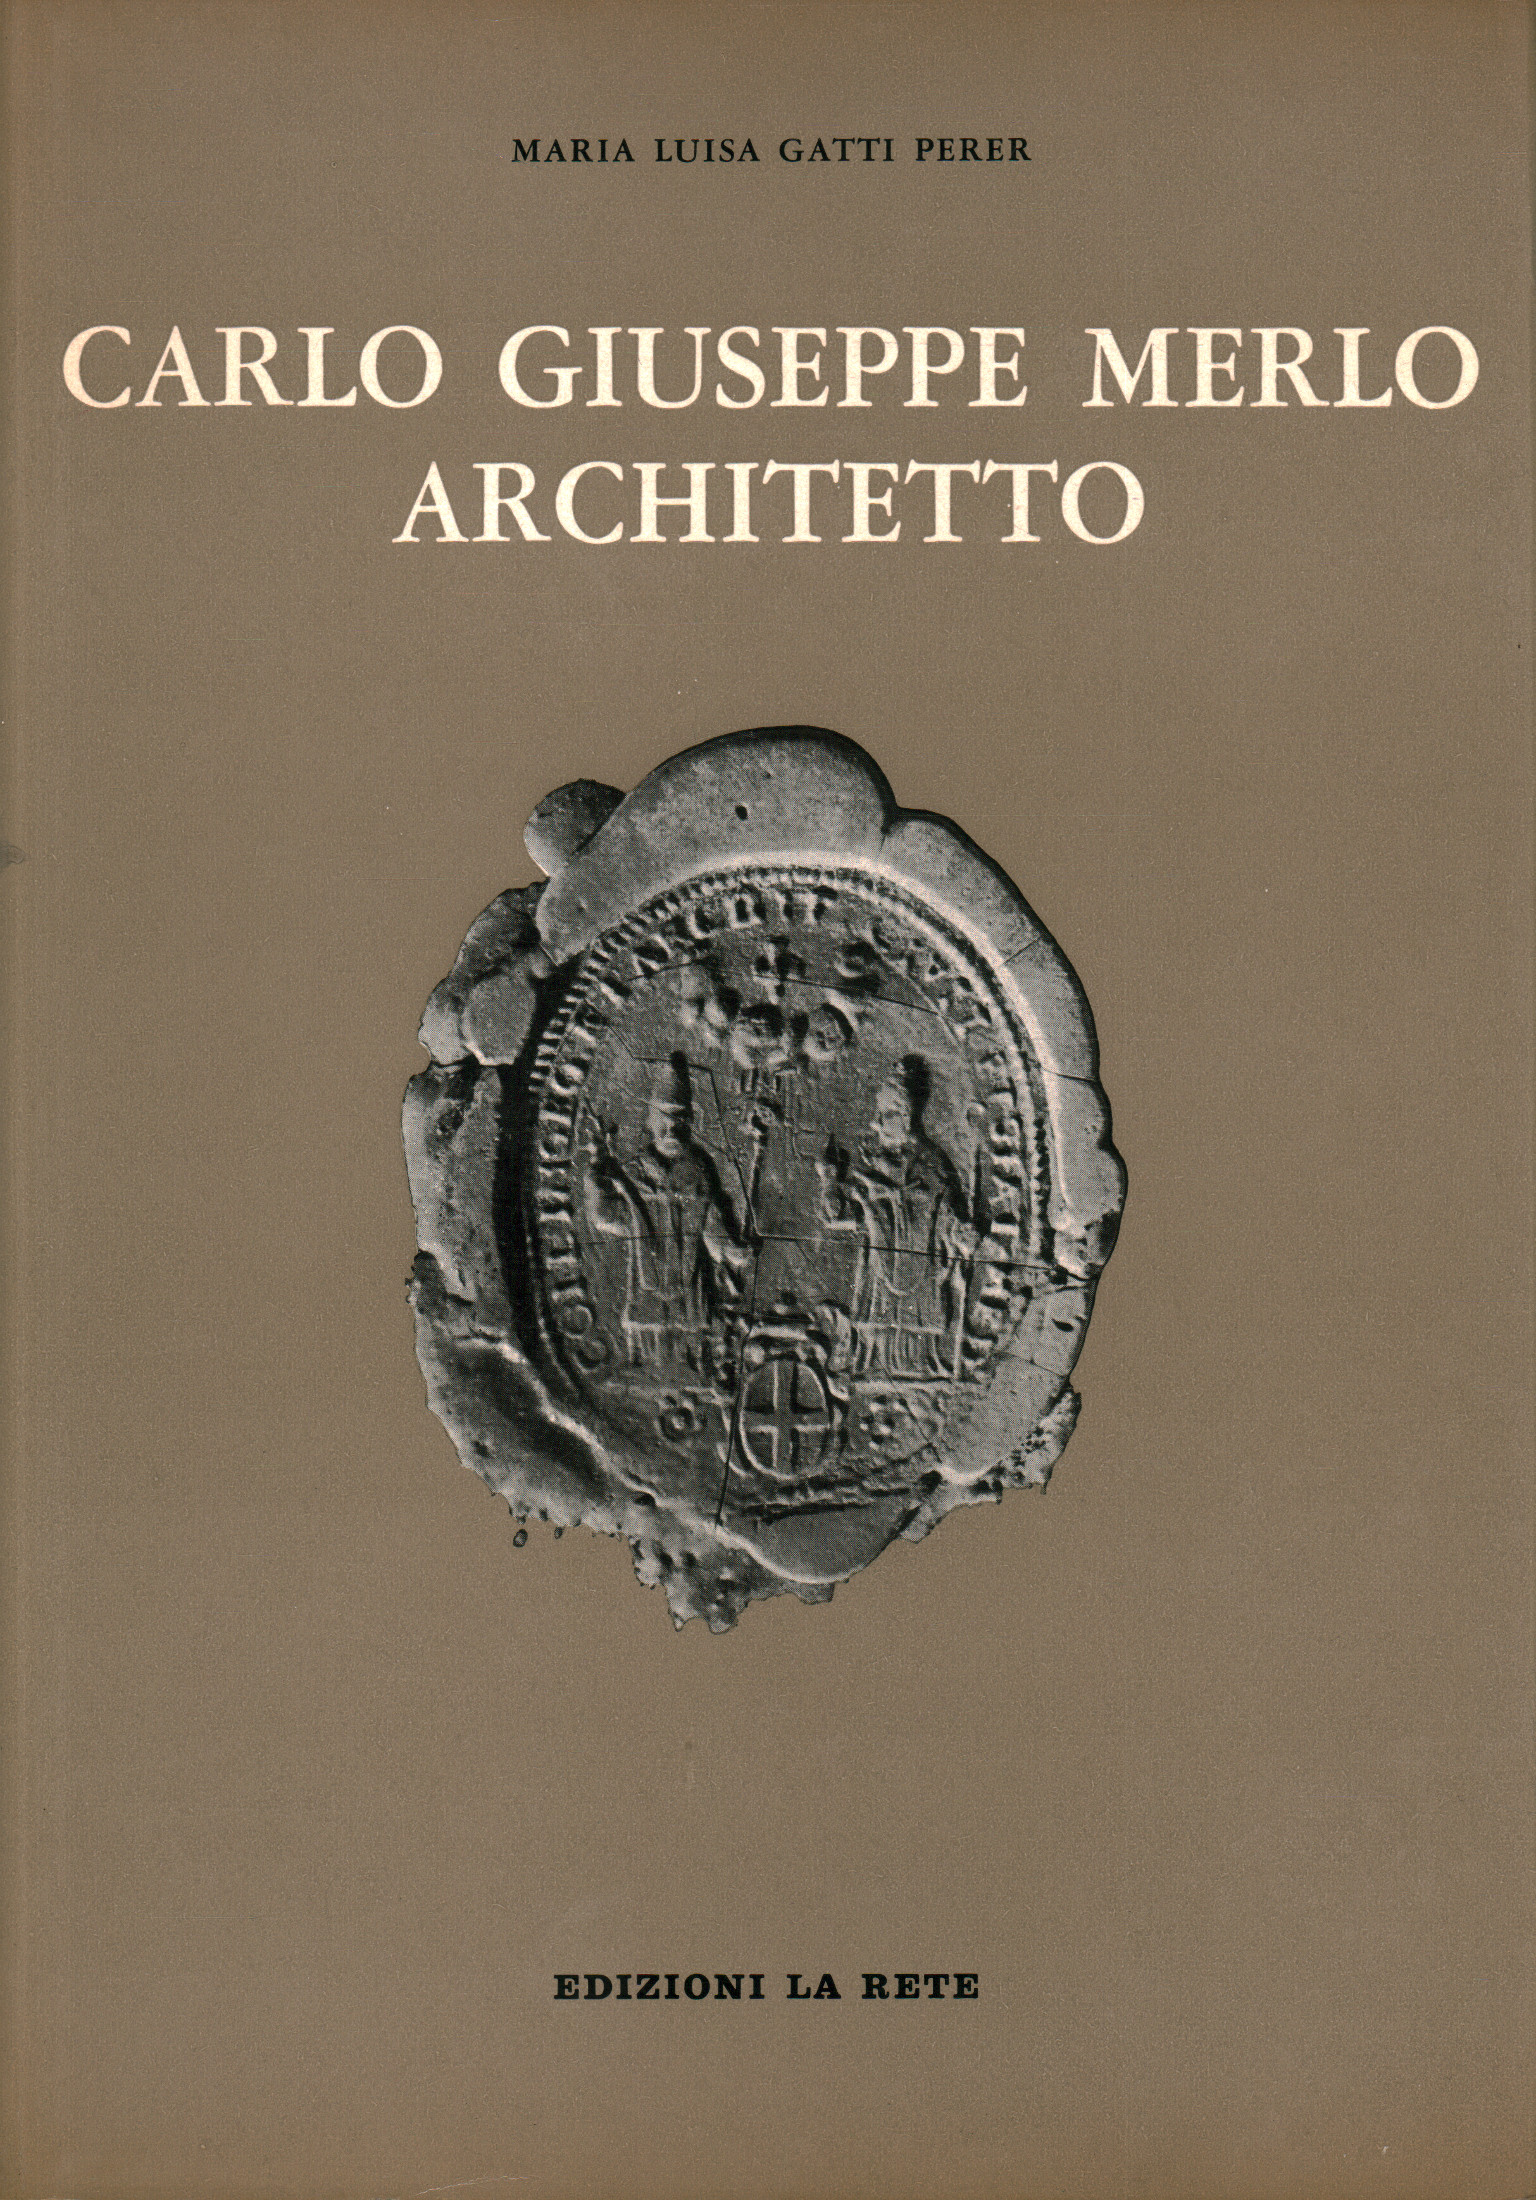 Carlo Giuseppe Merlo arquitecto